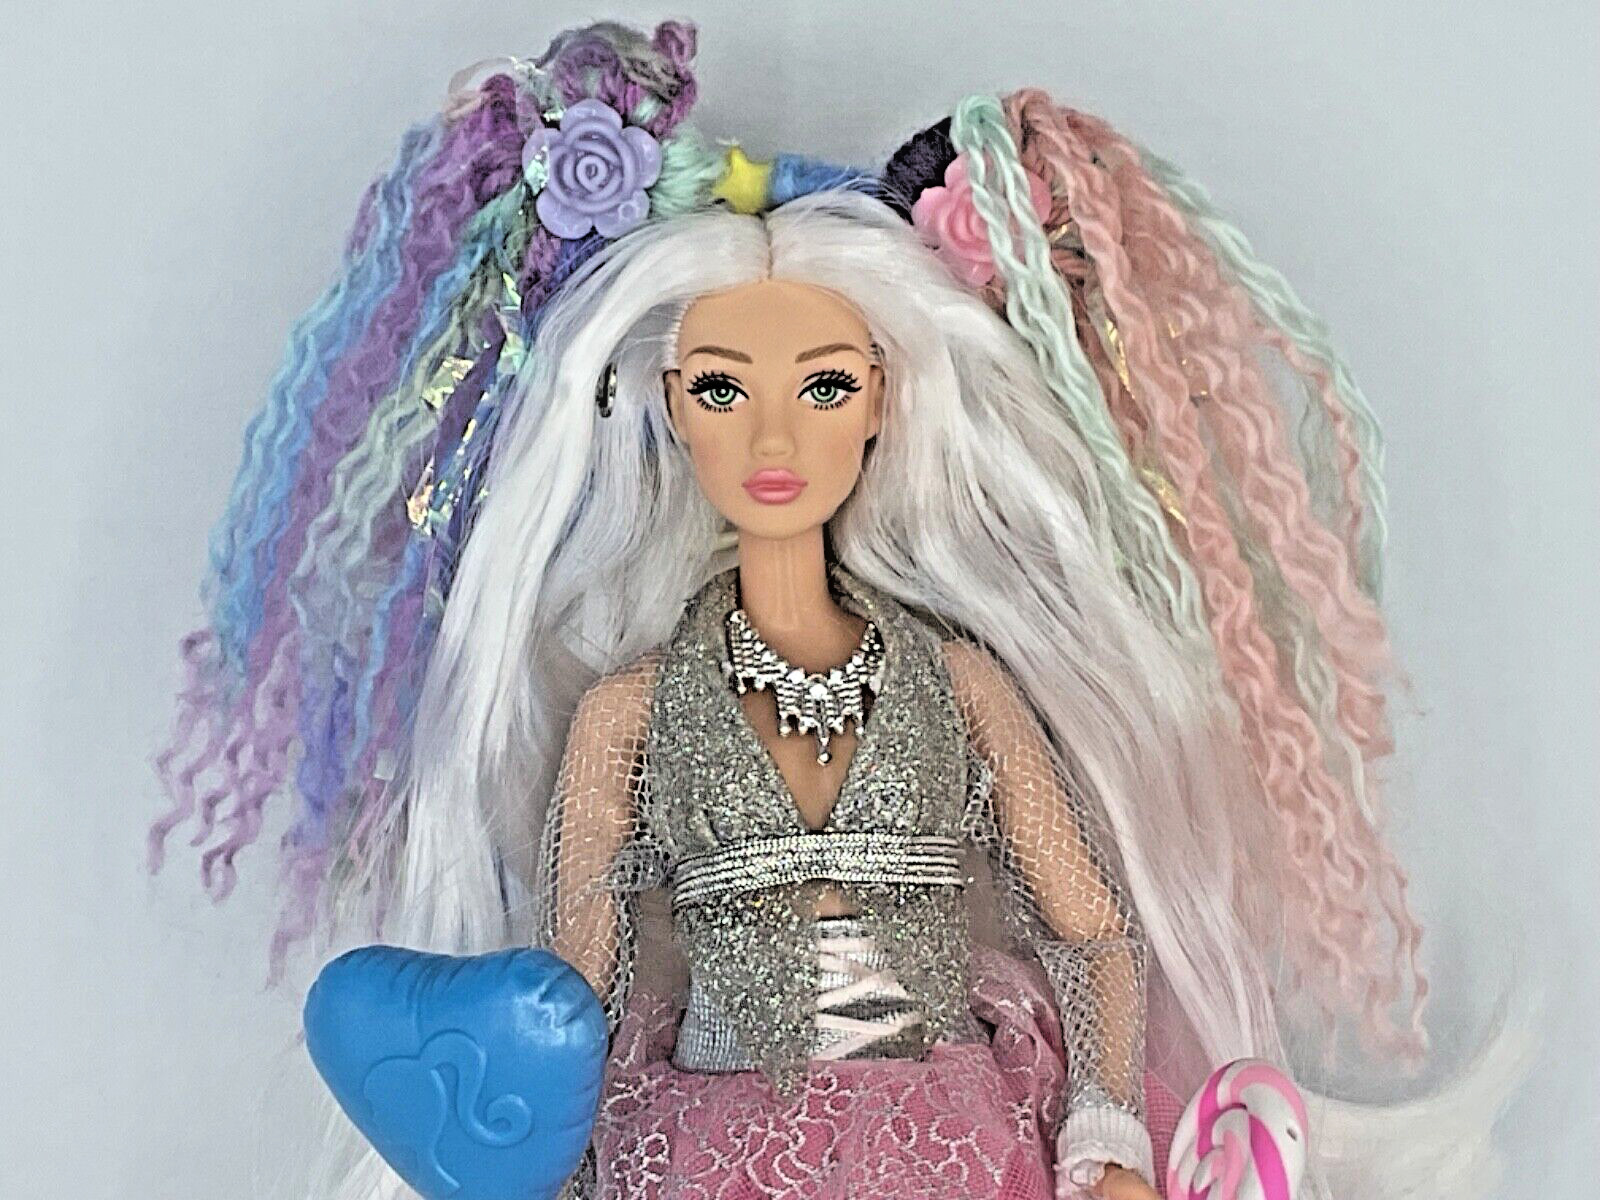 Barbie DOLL OOAK Unicorn Custom Dressed with Accessories